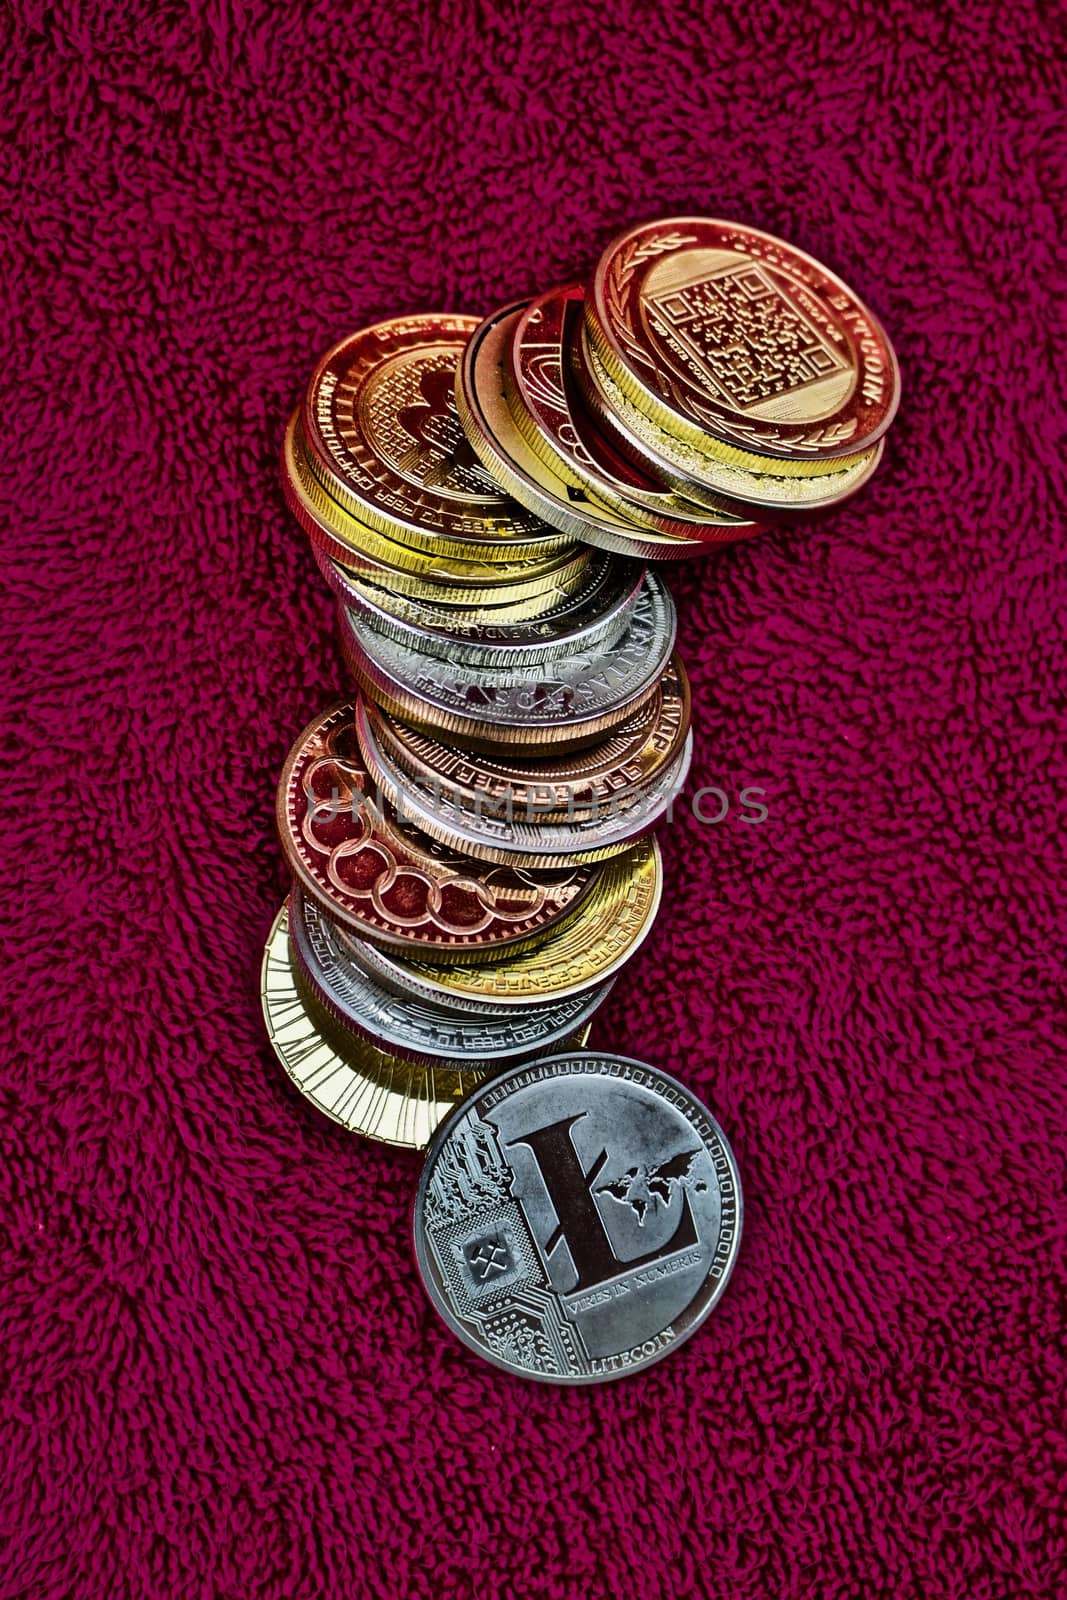 Digital currency physical coins, litecoin, bitcoin, dogecoin.